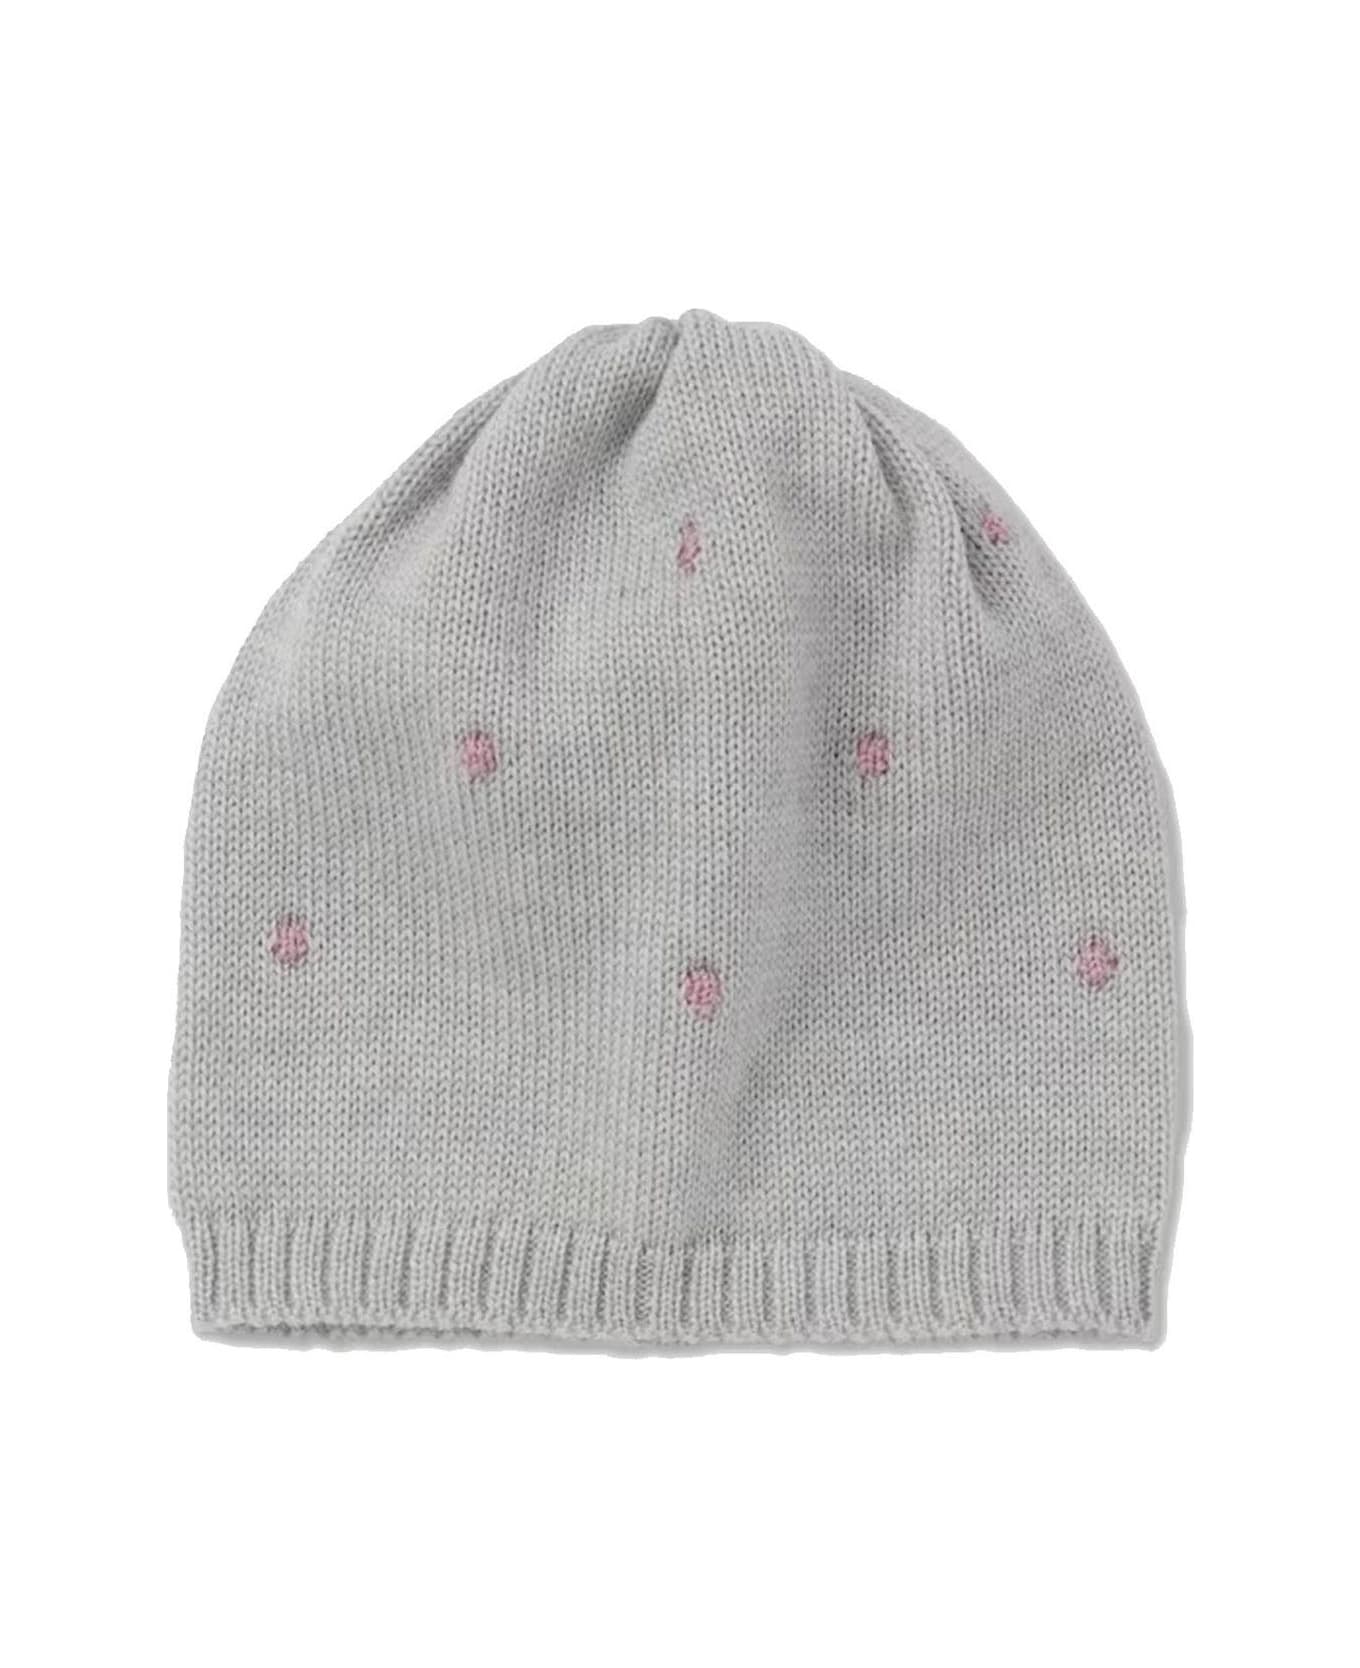 Little Bear Grey Virgin Wool Hat - Grigio/Peonia